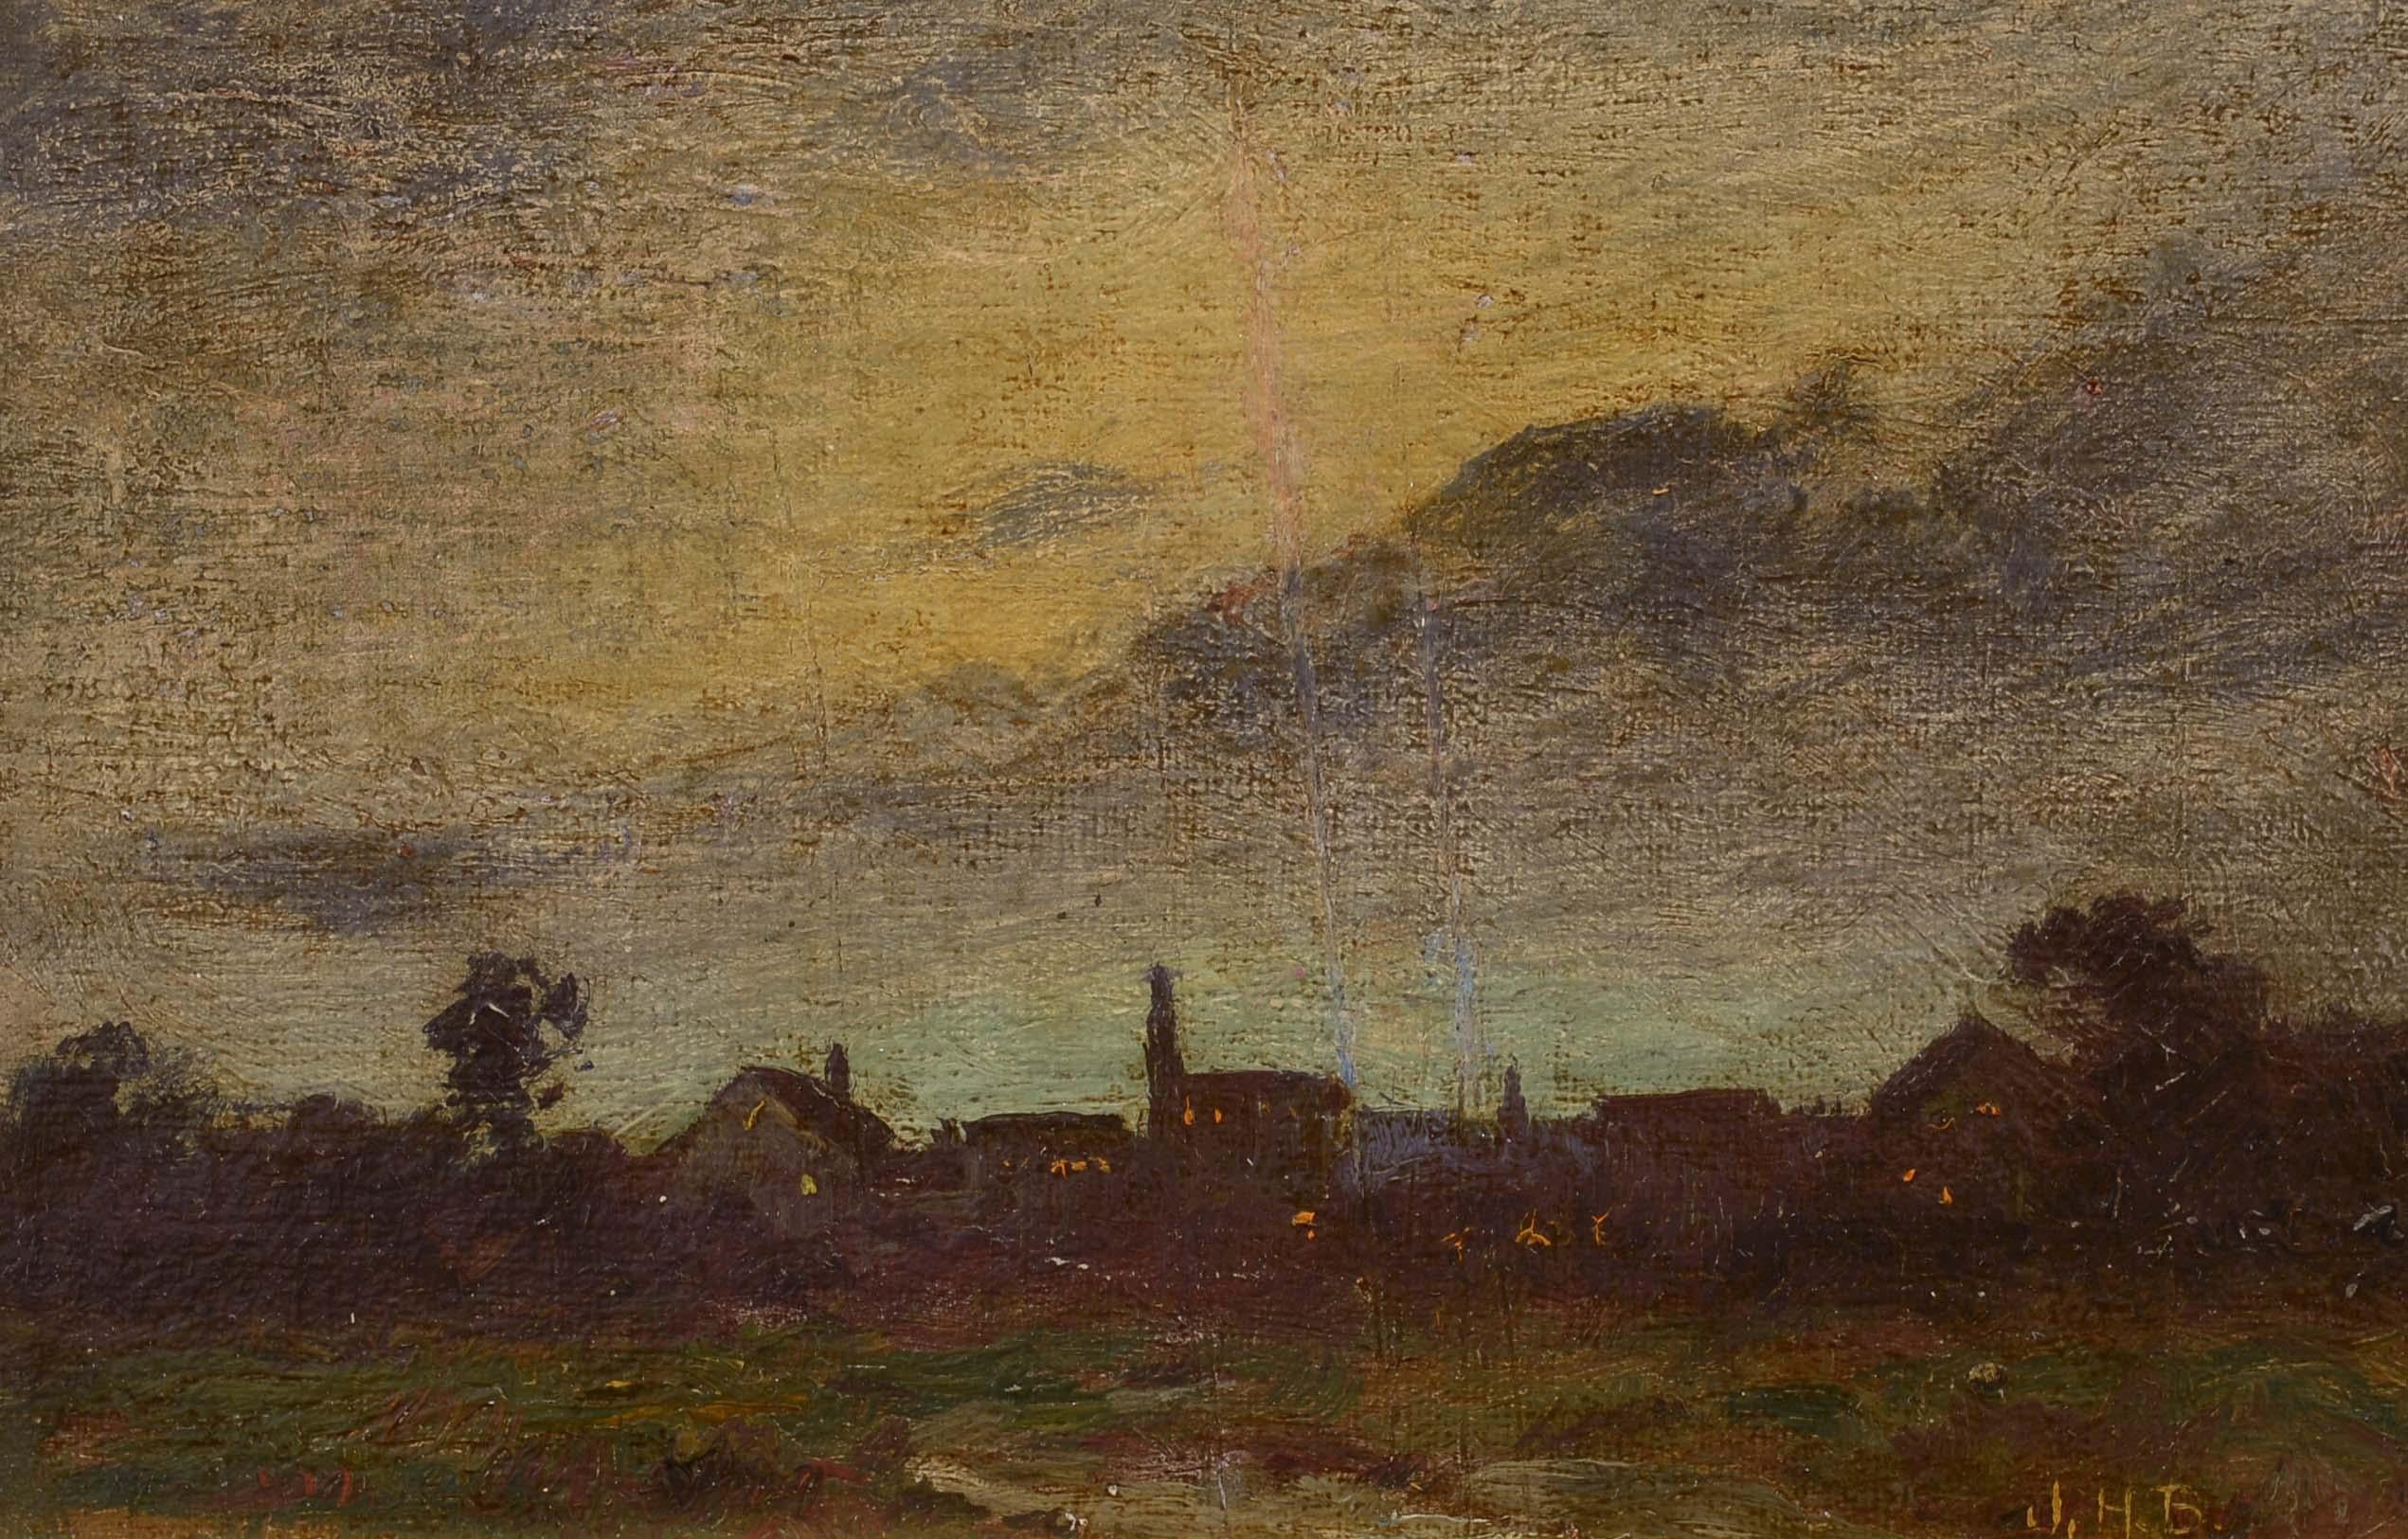 John Henry Boston Landscape Painting - Village at Night, Joseph Henry Boston, Impressionist